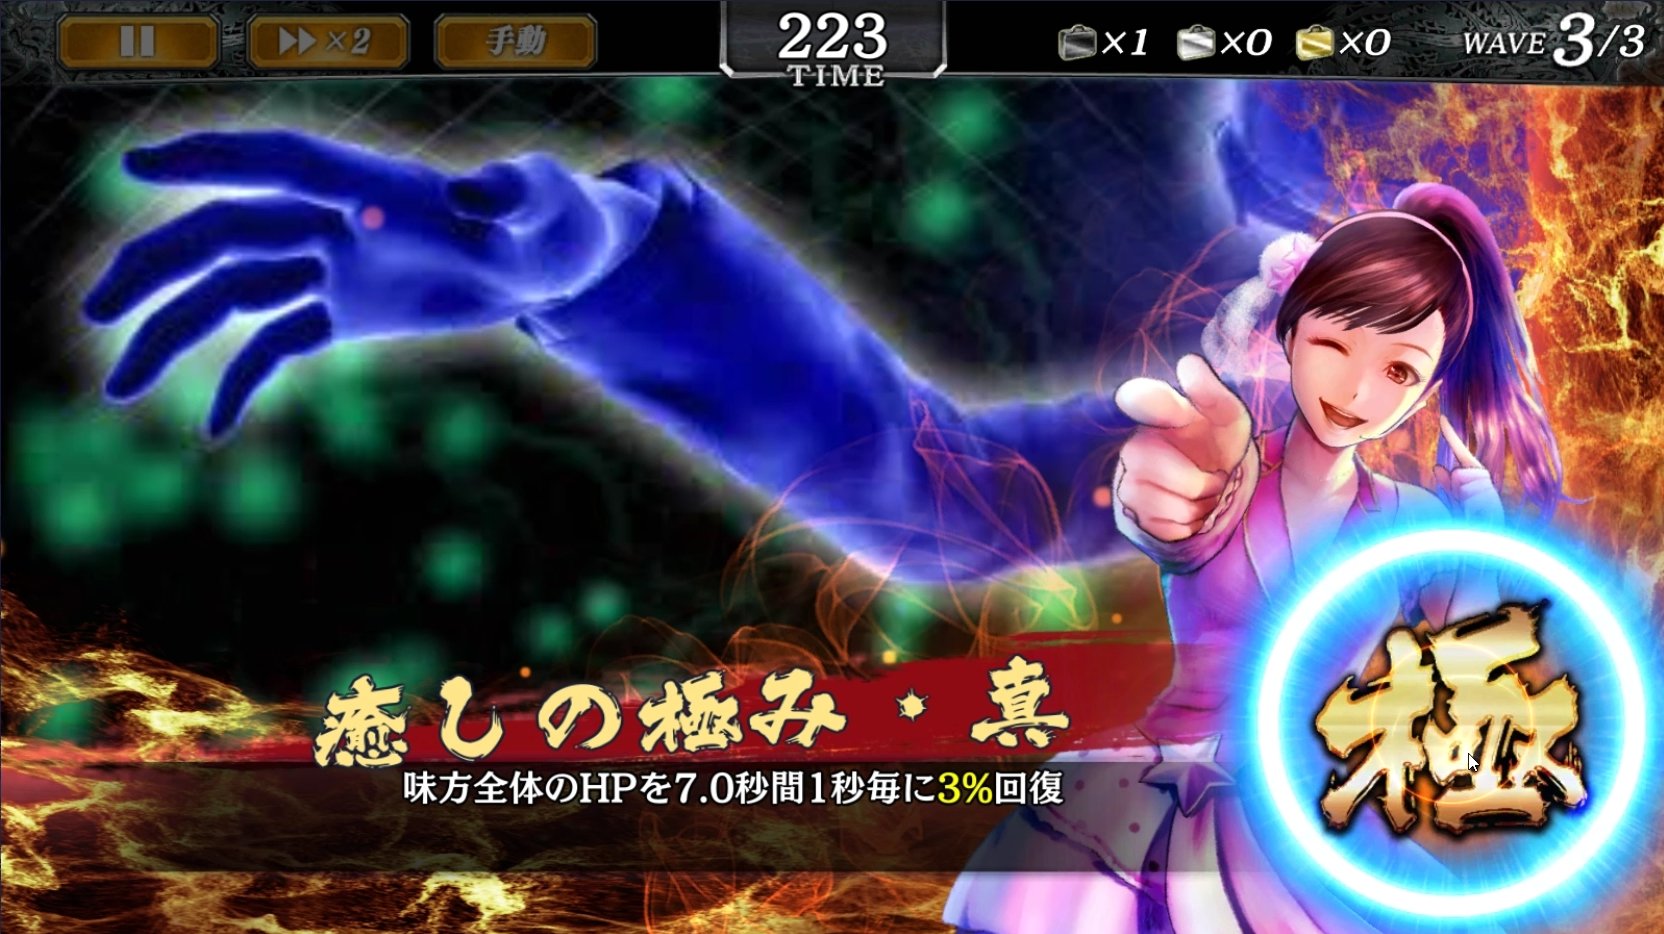 Yakuza Online Ryu Ga Gotoku online review Heat Skill